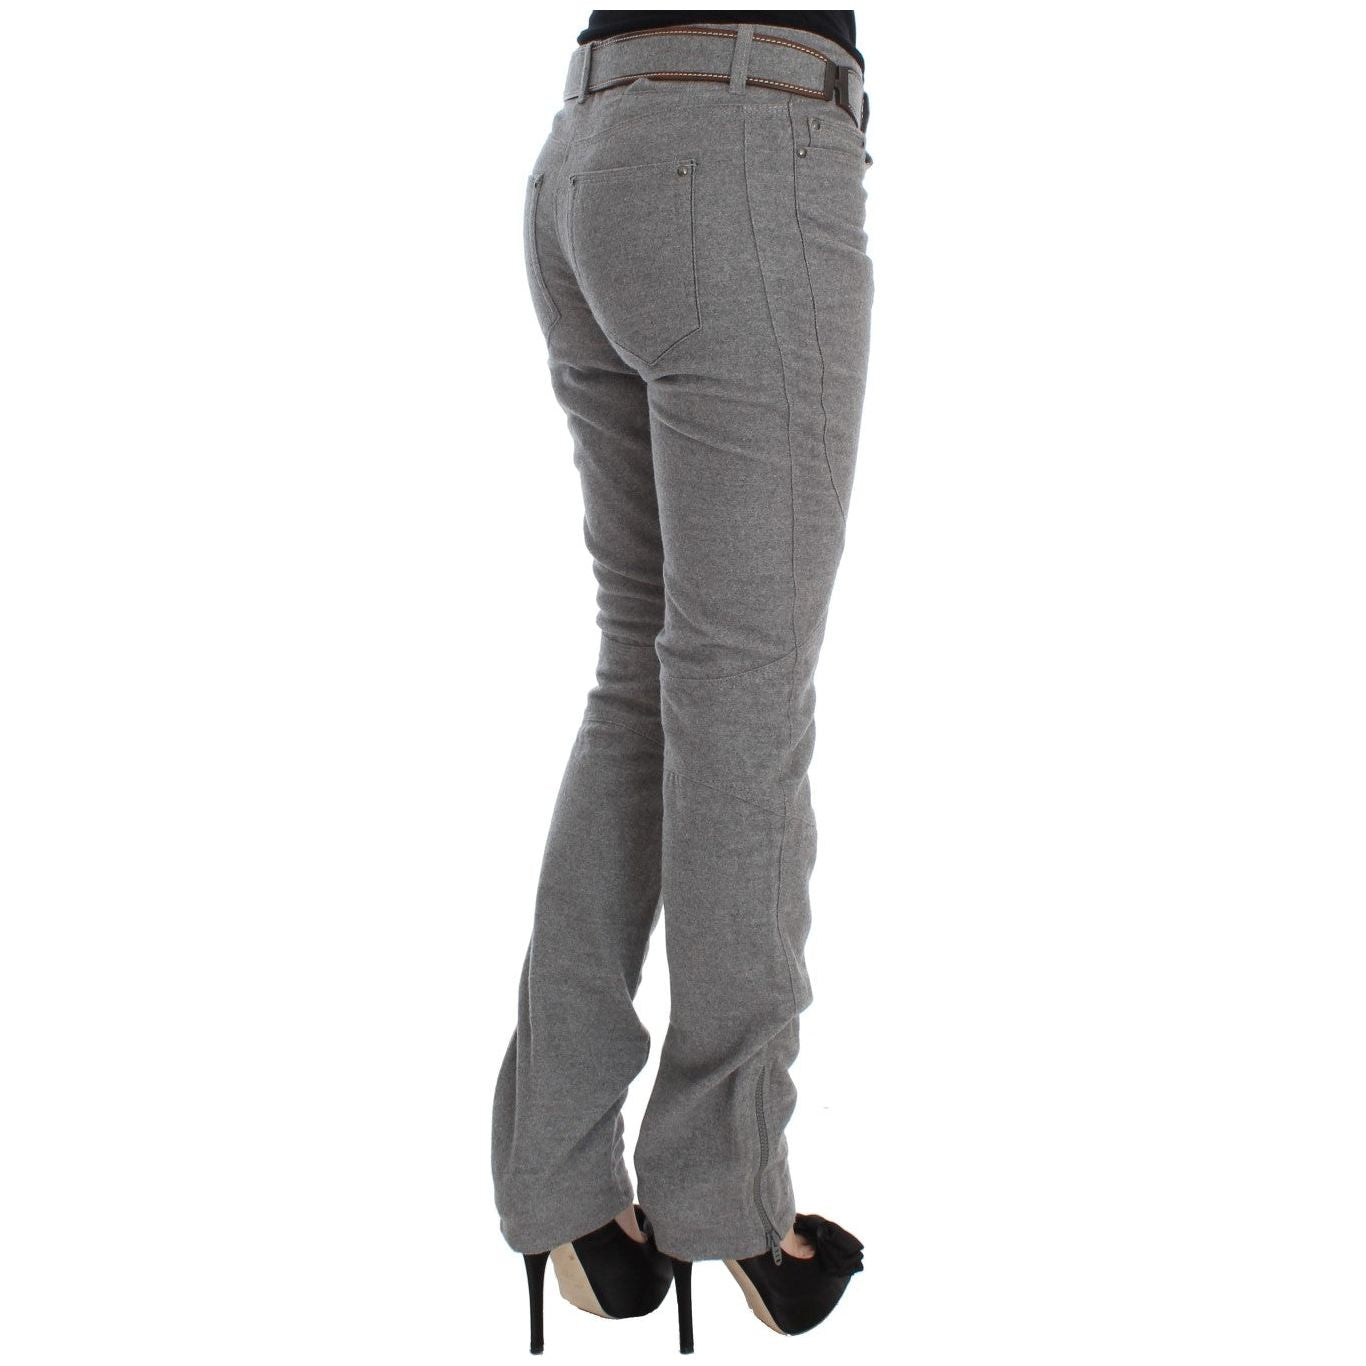 Ermanno Scervino Chic Gray Casual Cotton Pants gray-cotton-slim-fit-casual-bootcut-pants 330385-gray-cotton-slim-fit-casual-bootcut-pants-3.jpg